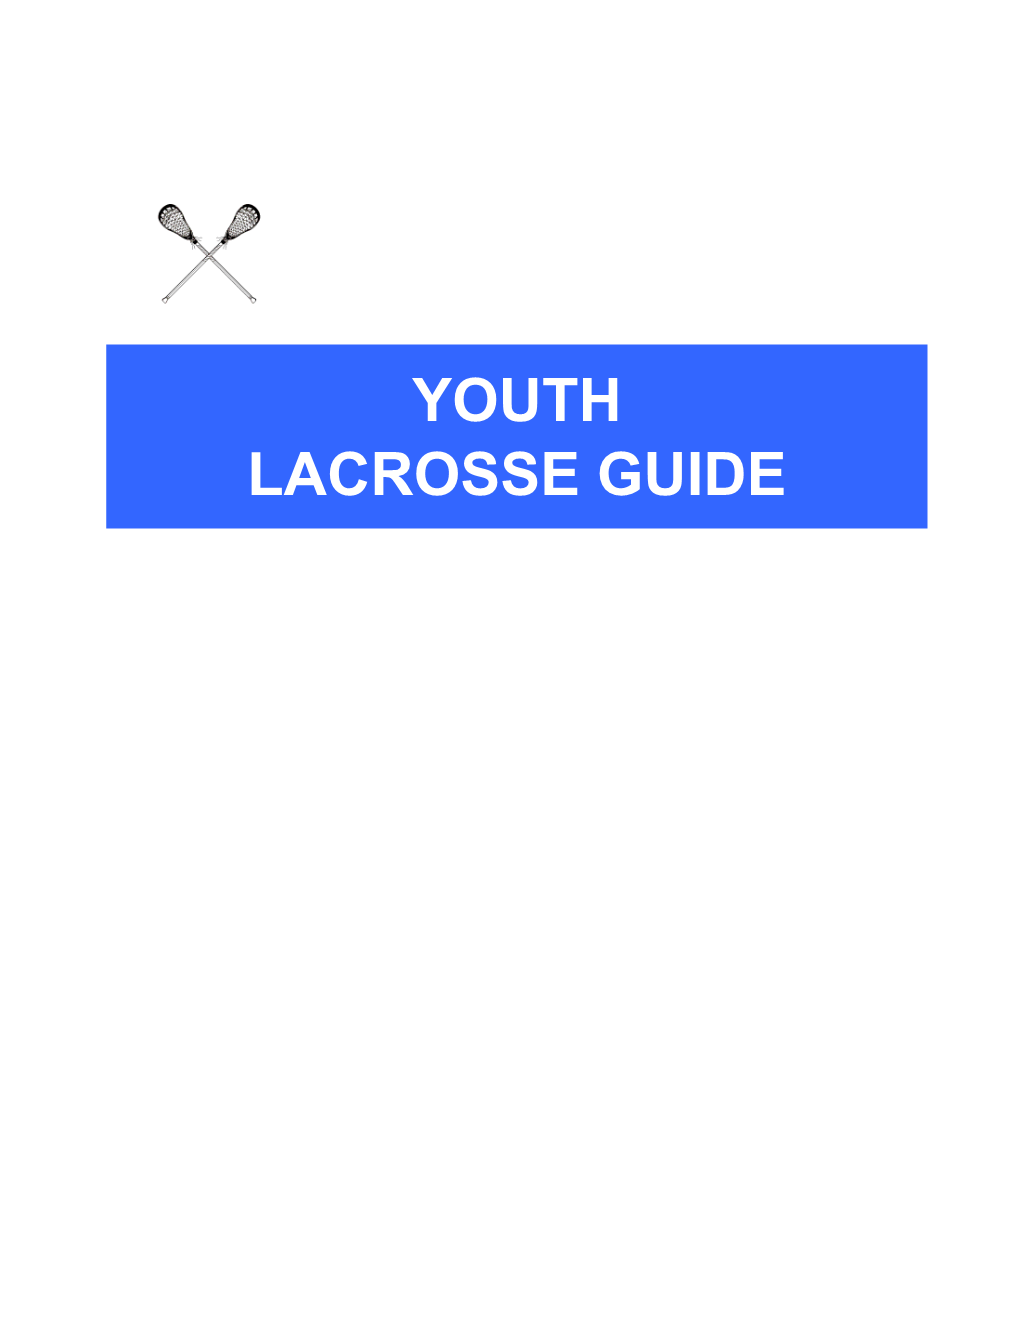 Massachusetts Bay Youth Lacrosse 11